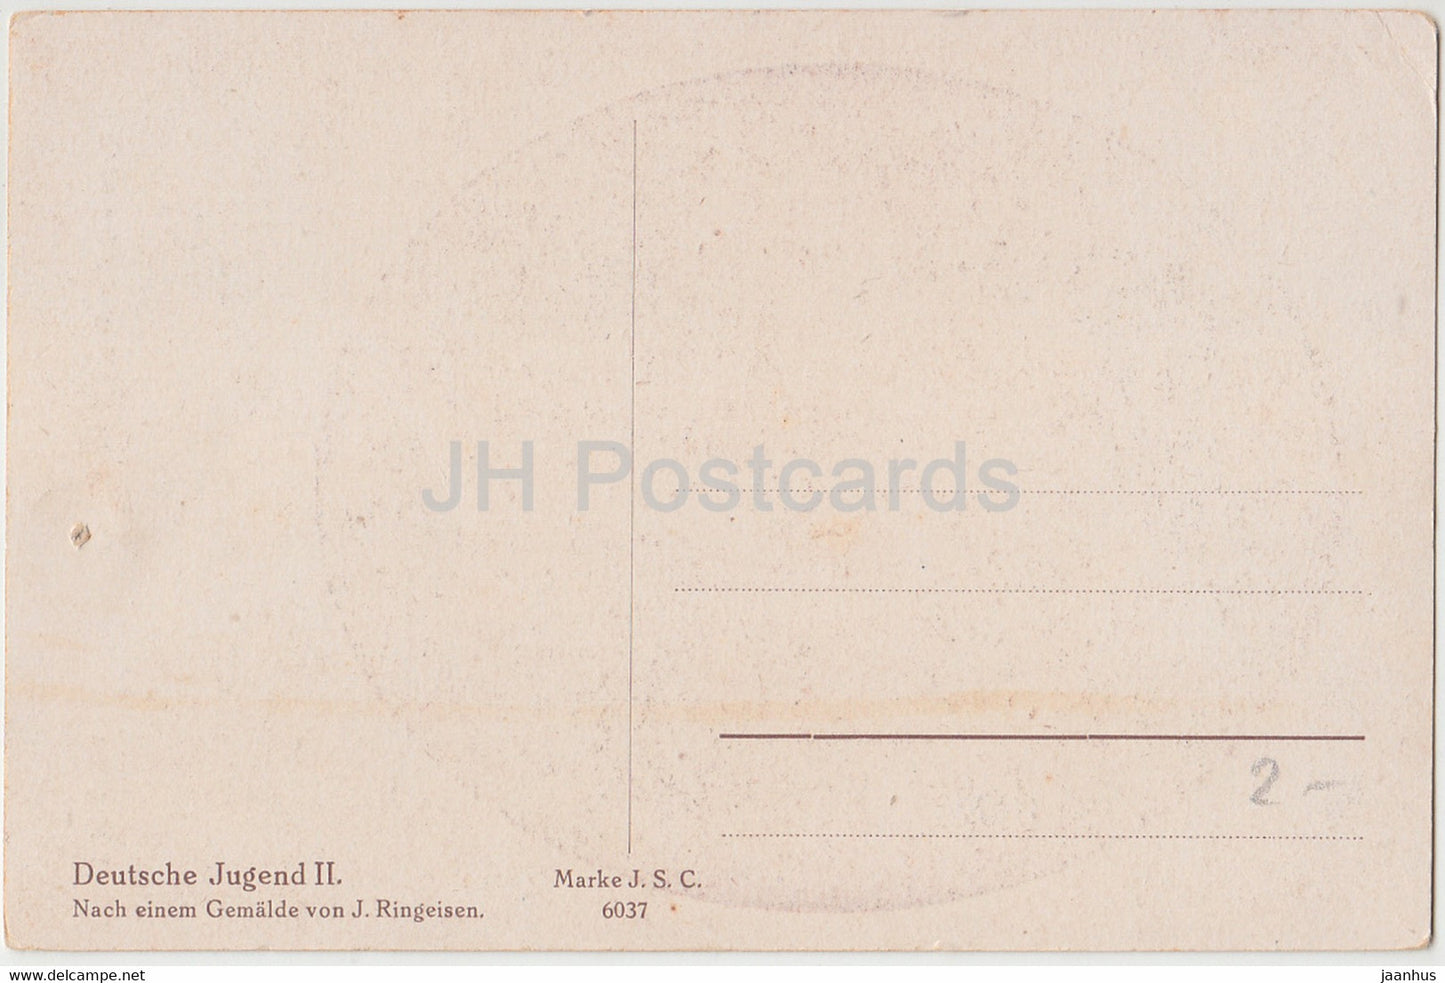 peinture de J. Ringeisen - Deutsche Jugend II - fille - Marke JSC 6037 - Art allemand - carte postale ancienne - Allemagne - inutilisé